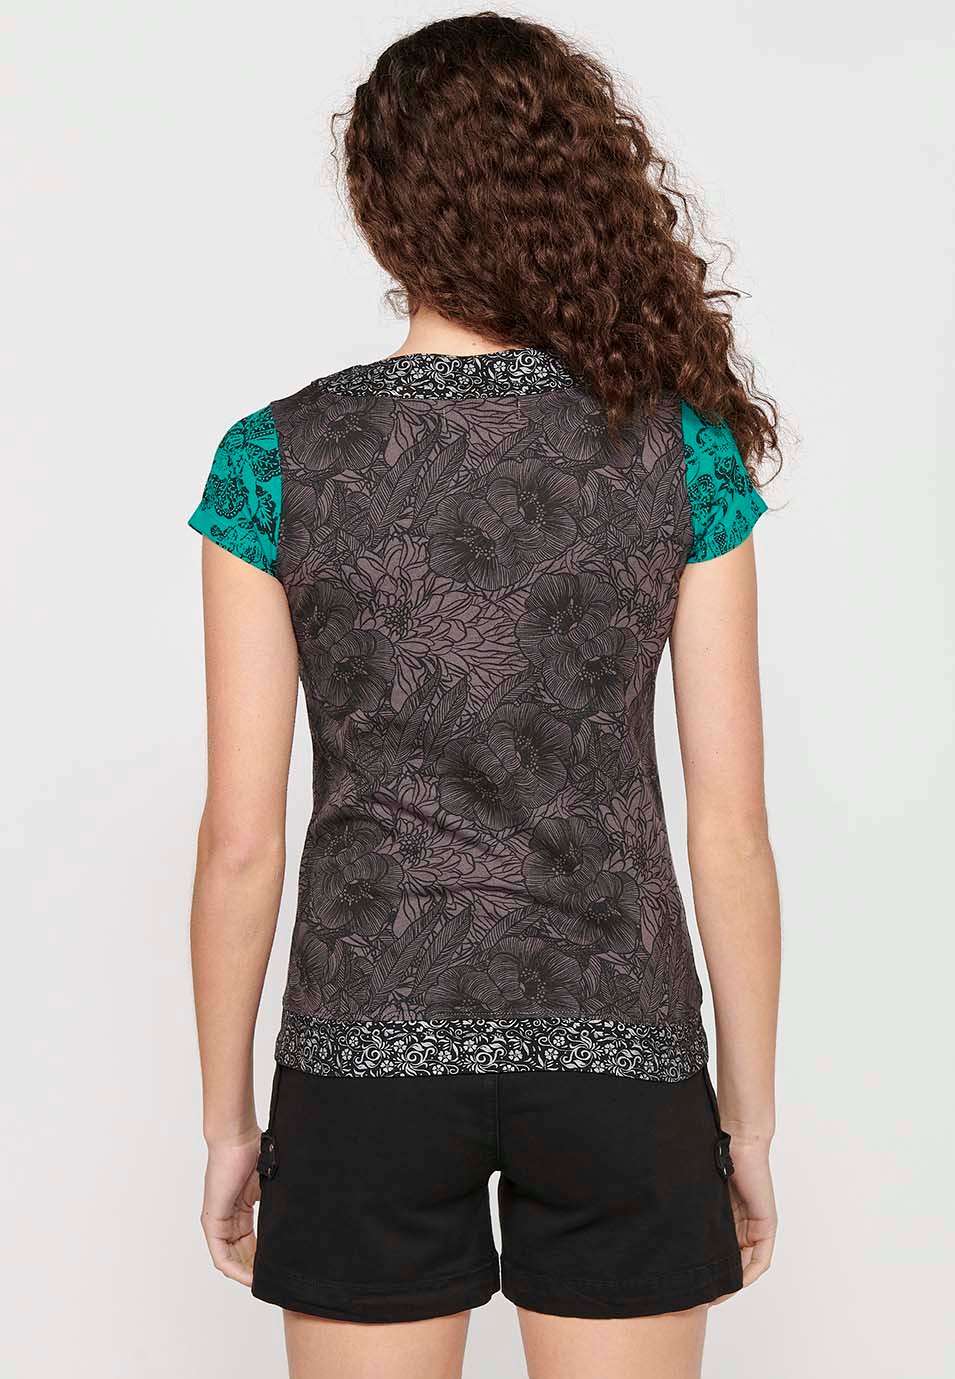 Mint Floral Print V-Neck Cotton Short-Sleeved T-Shirt for Women 1